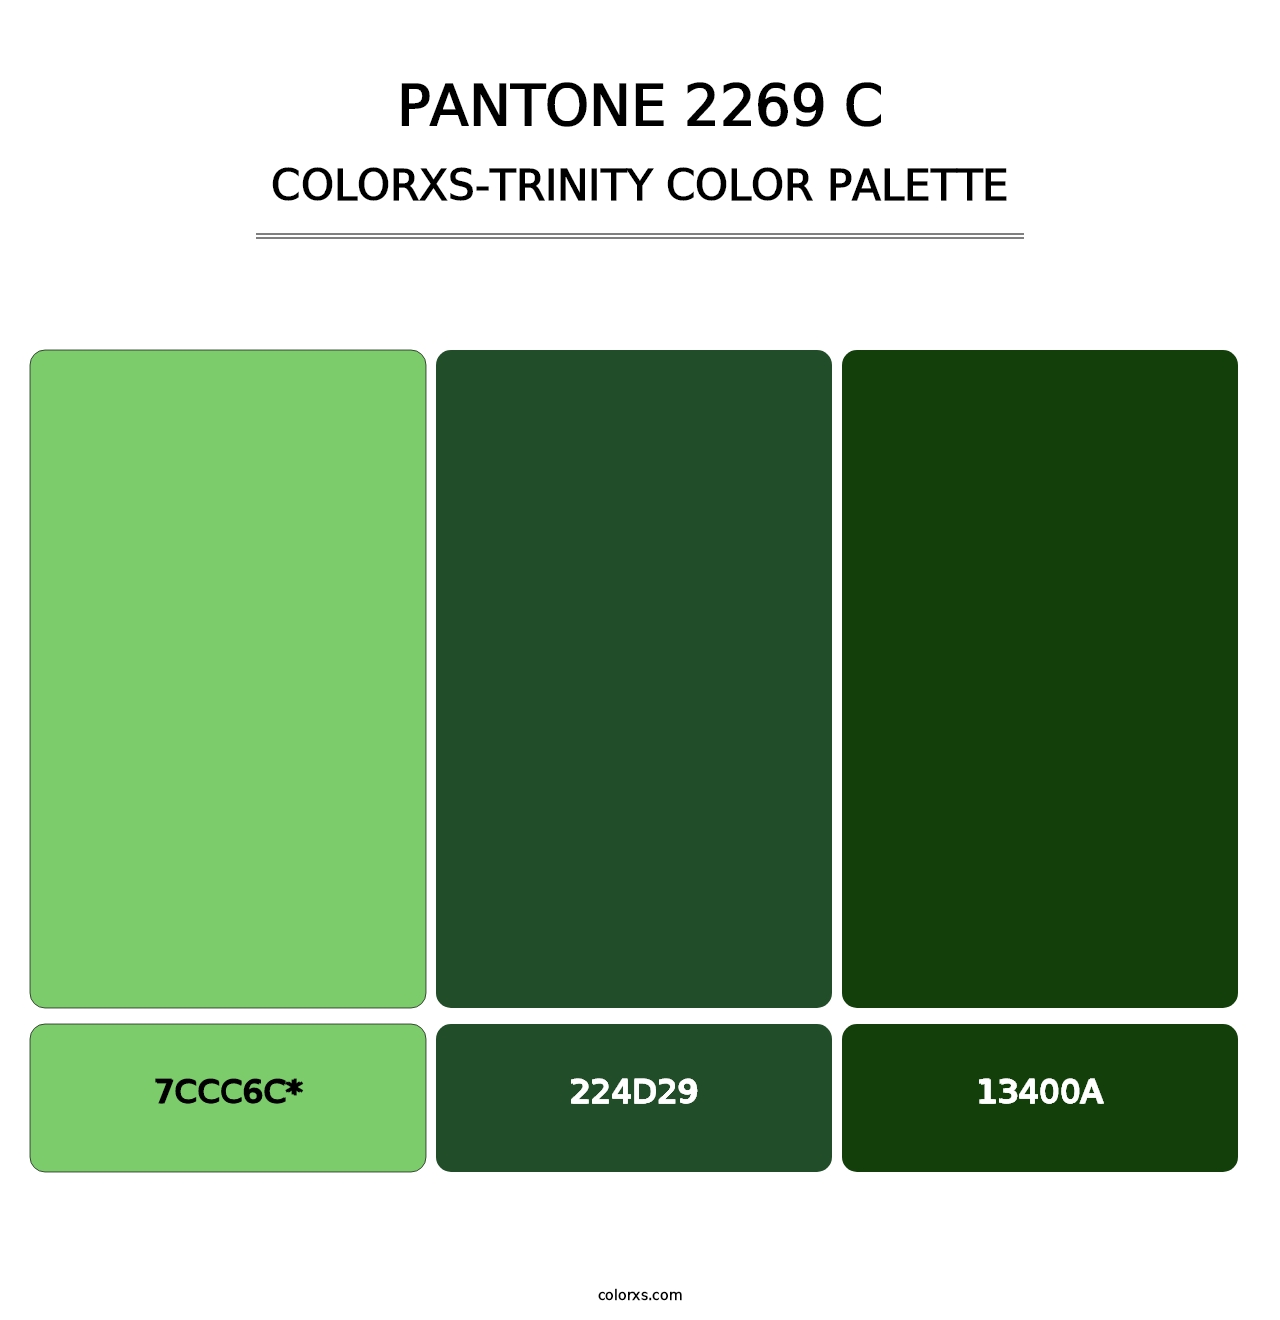 PANTONE 2269 C - Colorxs Trinity Palette